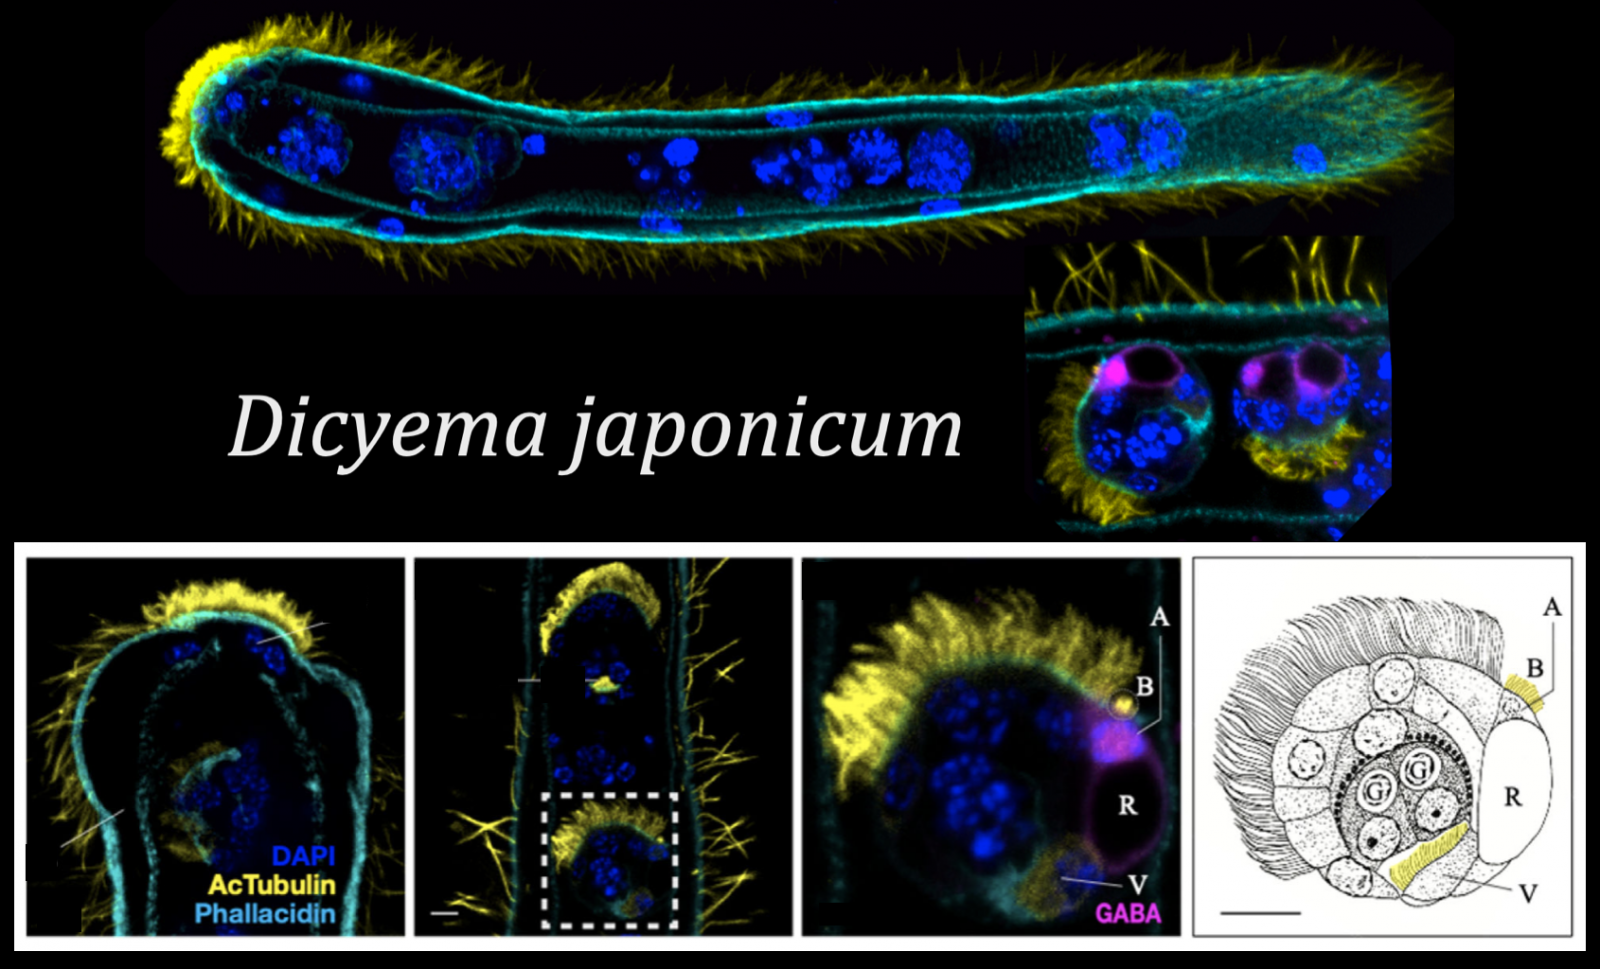 二胚蟲（dicyemid）感覺細胞之分化